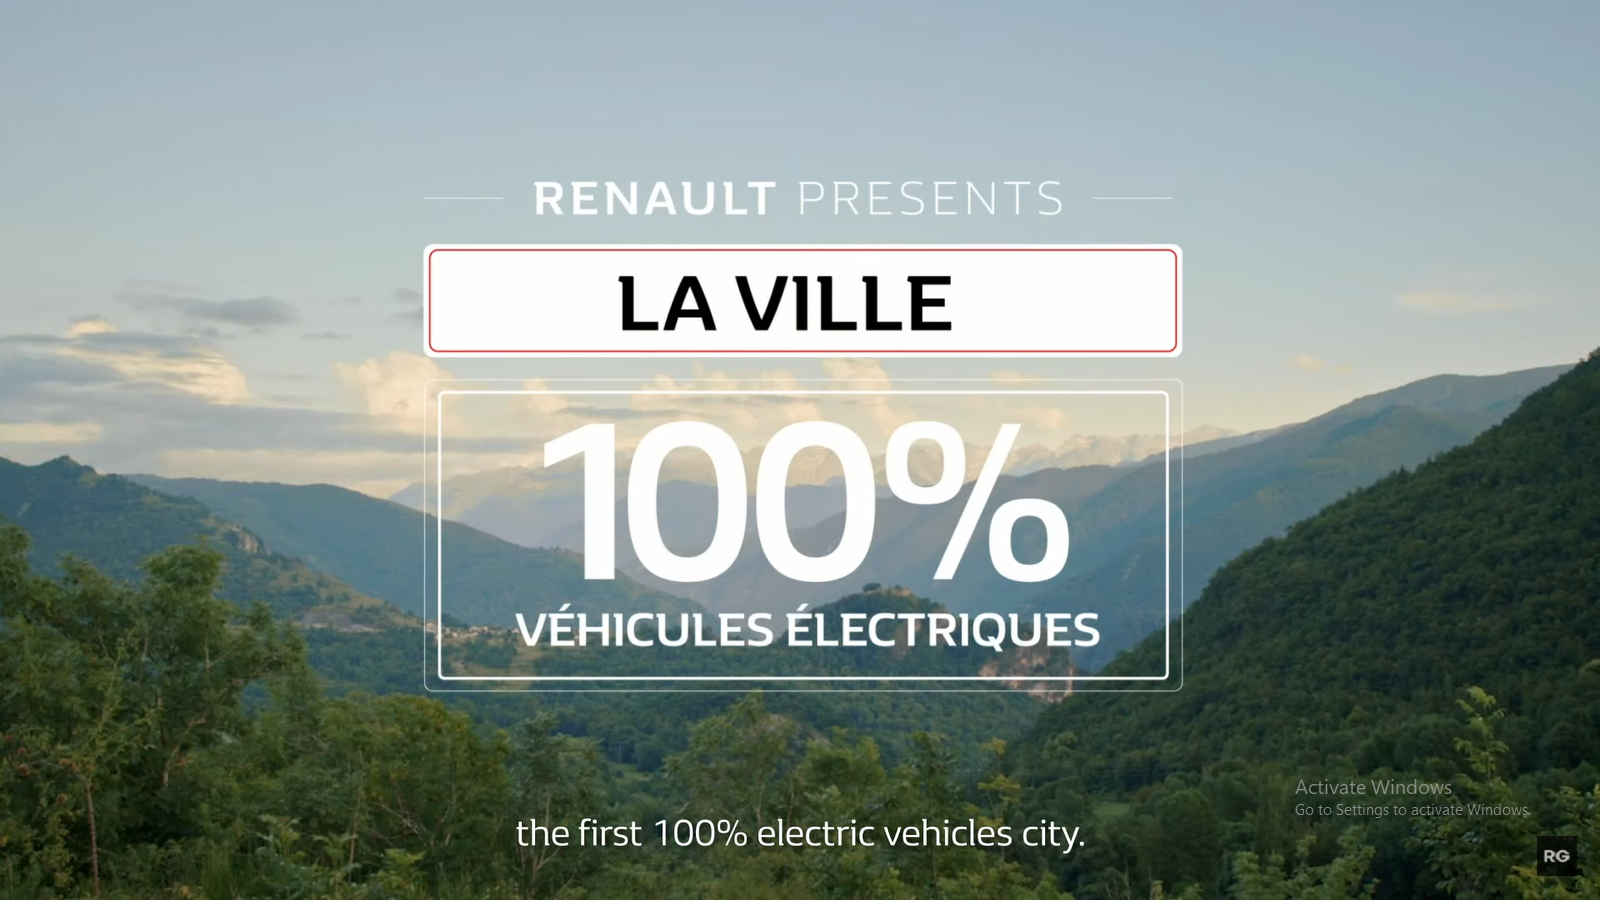 “La ville 100% véhicules électriques" - Ngôi làng 100% sử dụng xe điện 